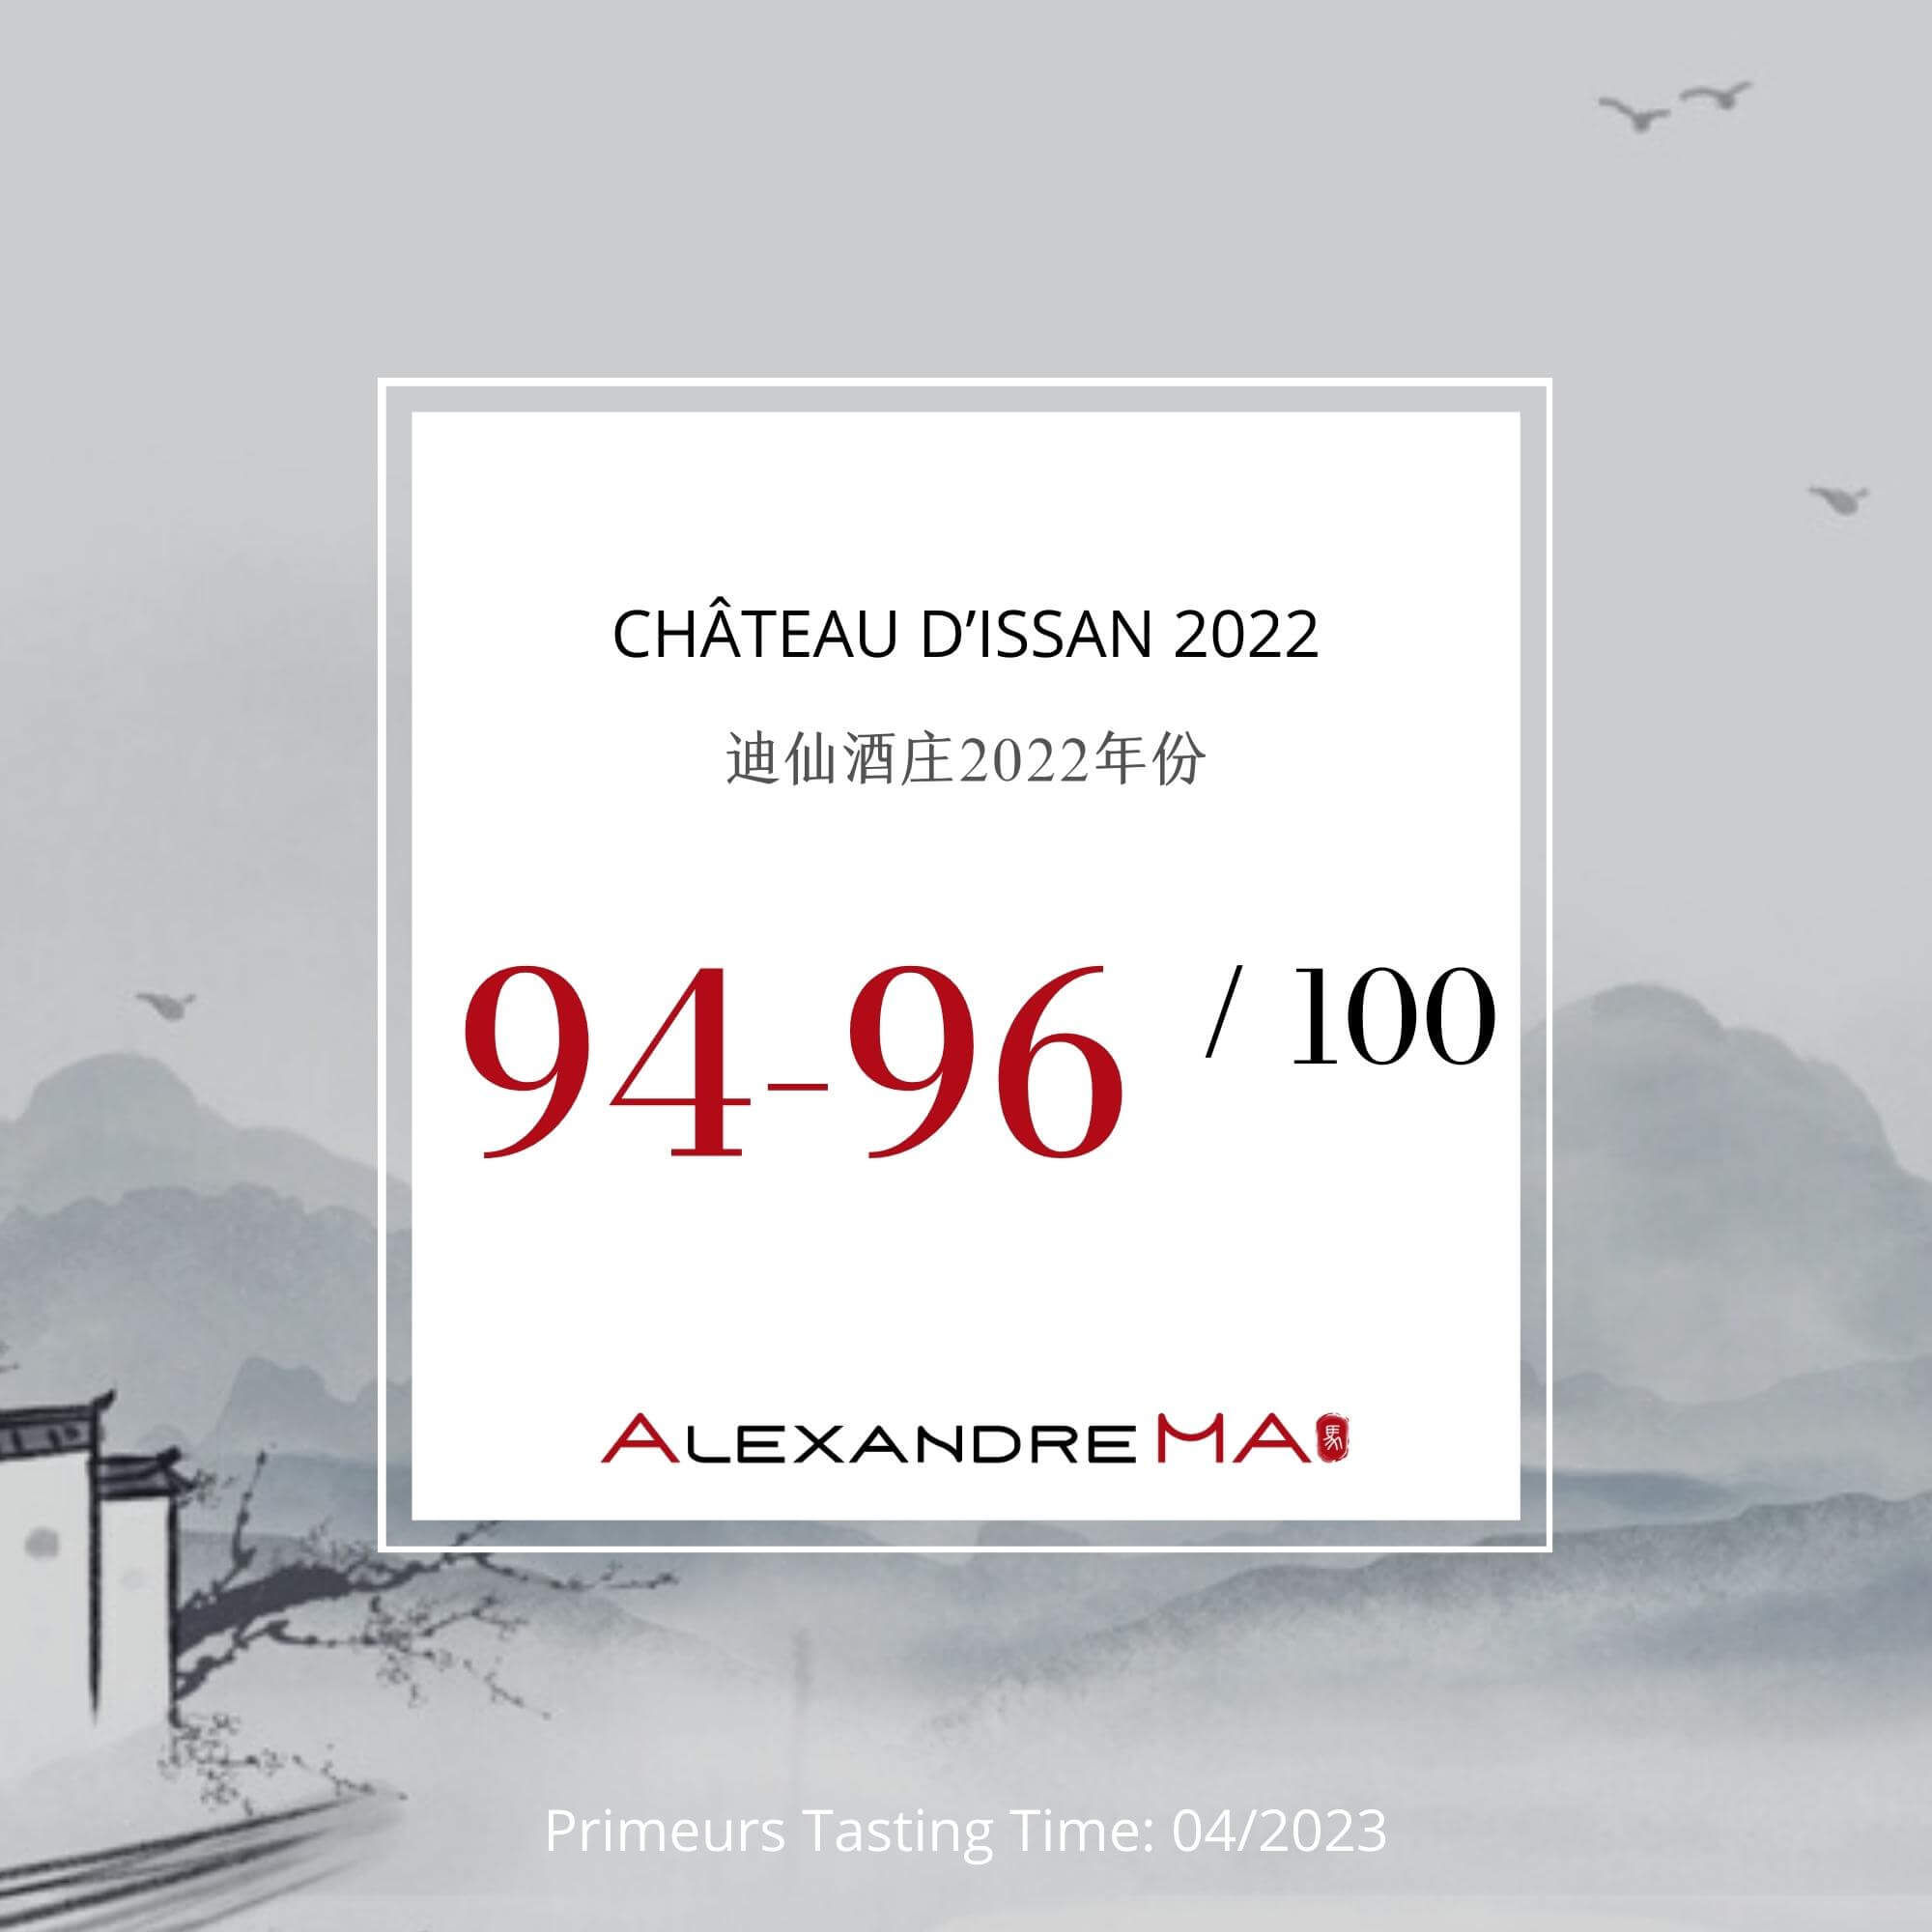 Château d’Issan 2022 Primeurs 迪仙酒庄 - Alexandre Ma